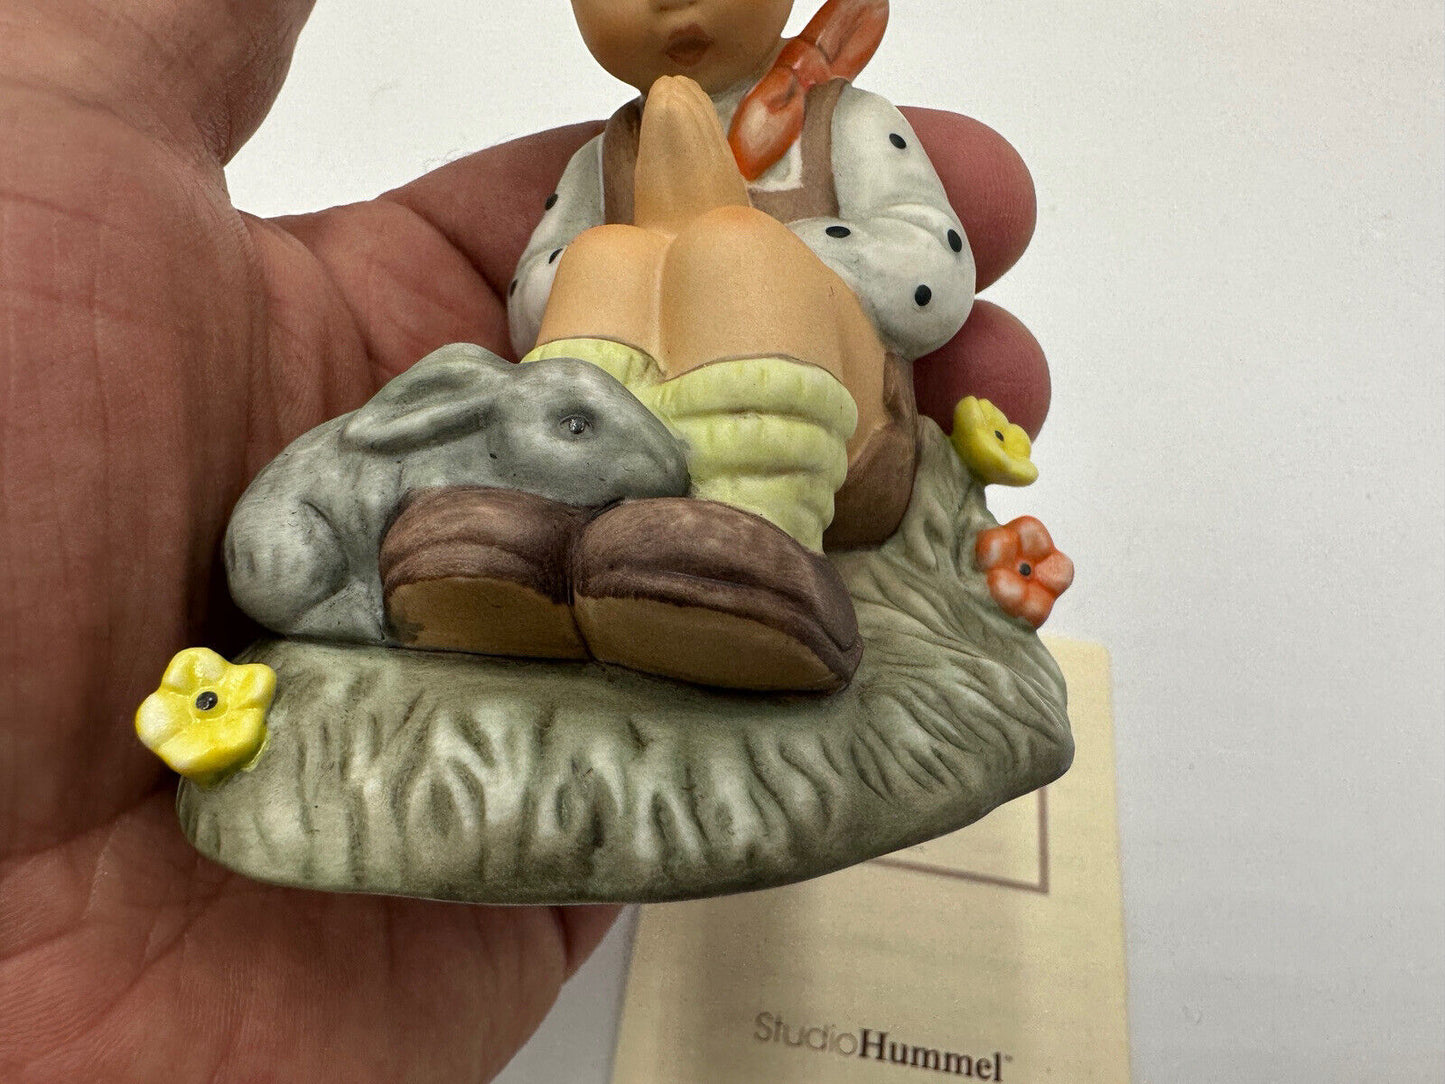 Vintage Berta Hummel Goebel Porcelain Figurine Bh55 “Nature's Prayer” 1997 Decor